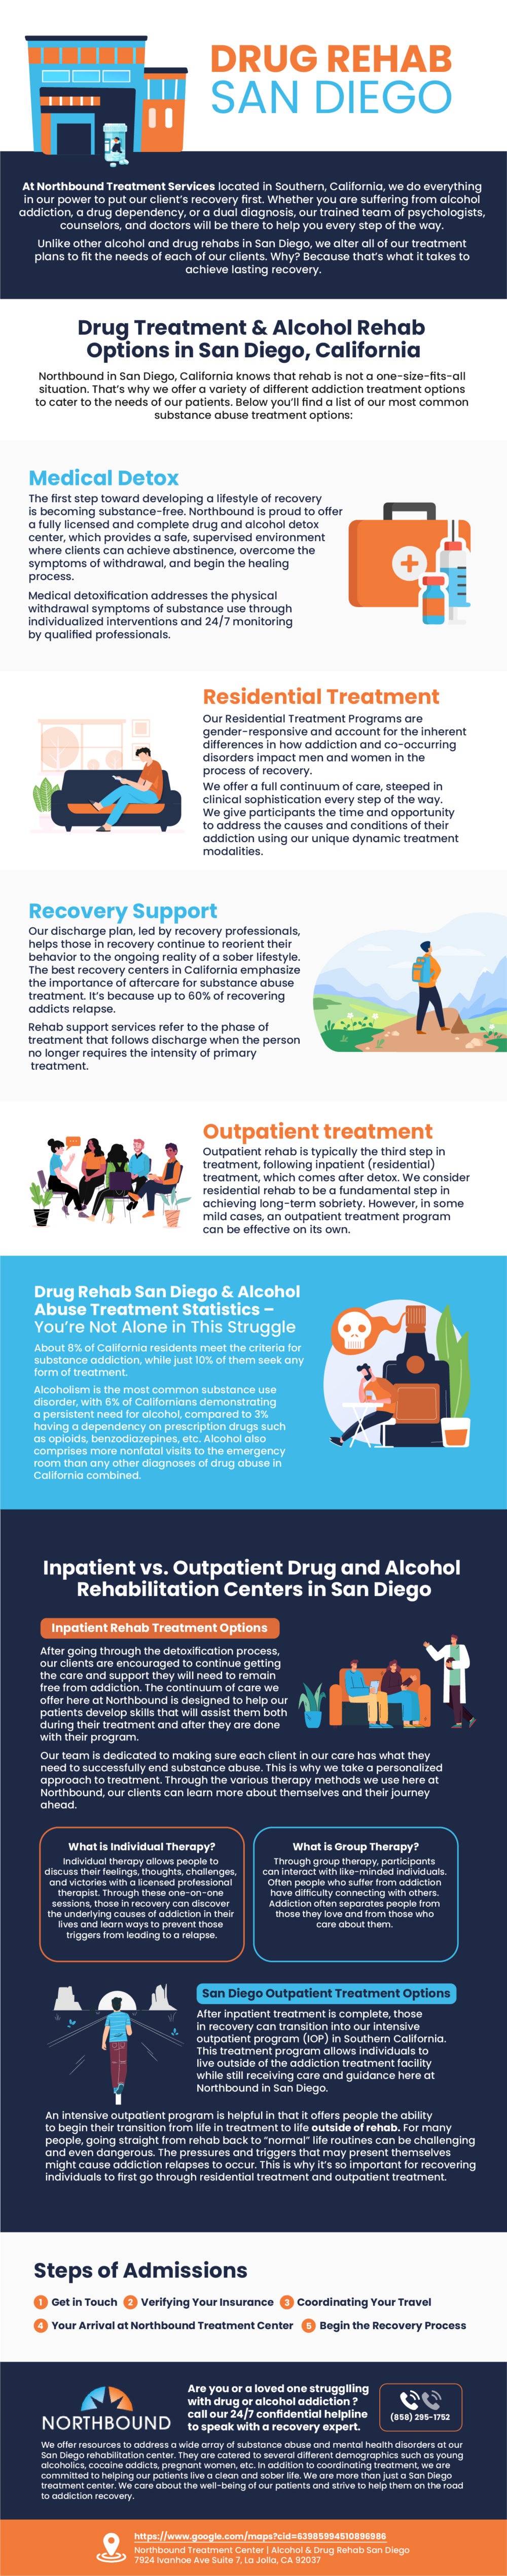 Drug Rehab San Diego